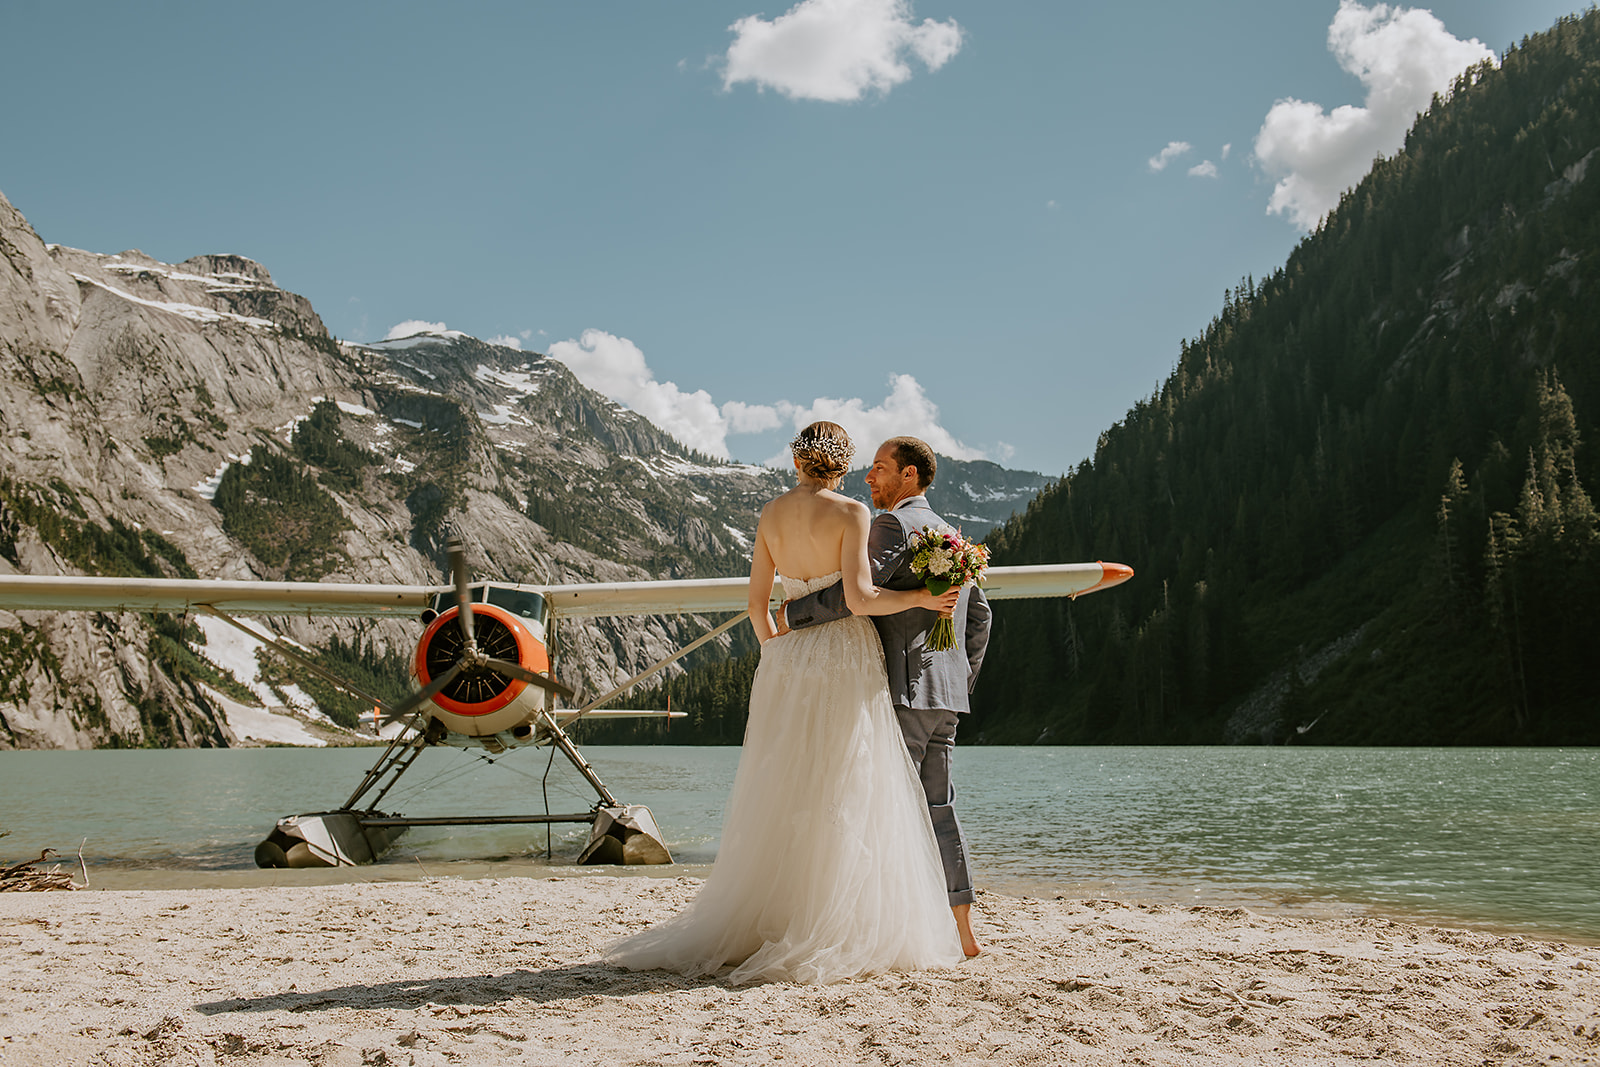 Adventure elopement couple and float plane